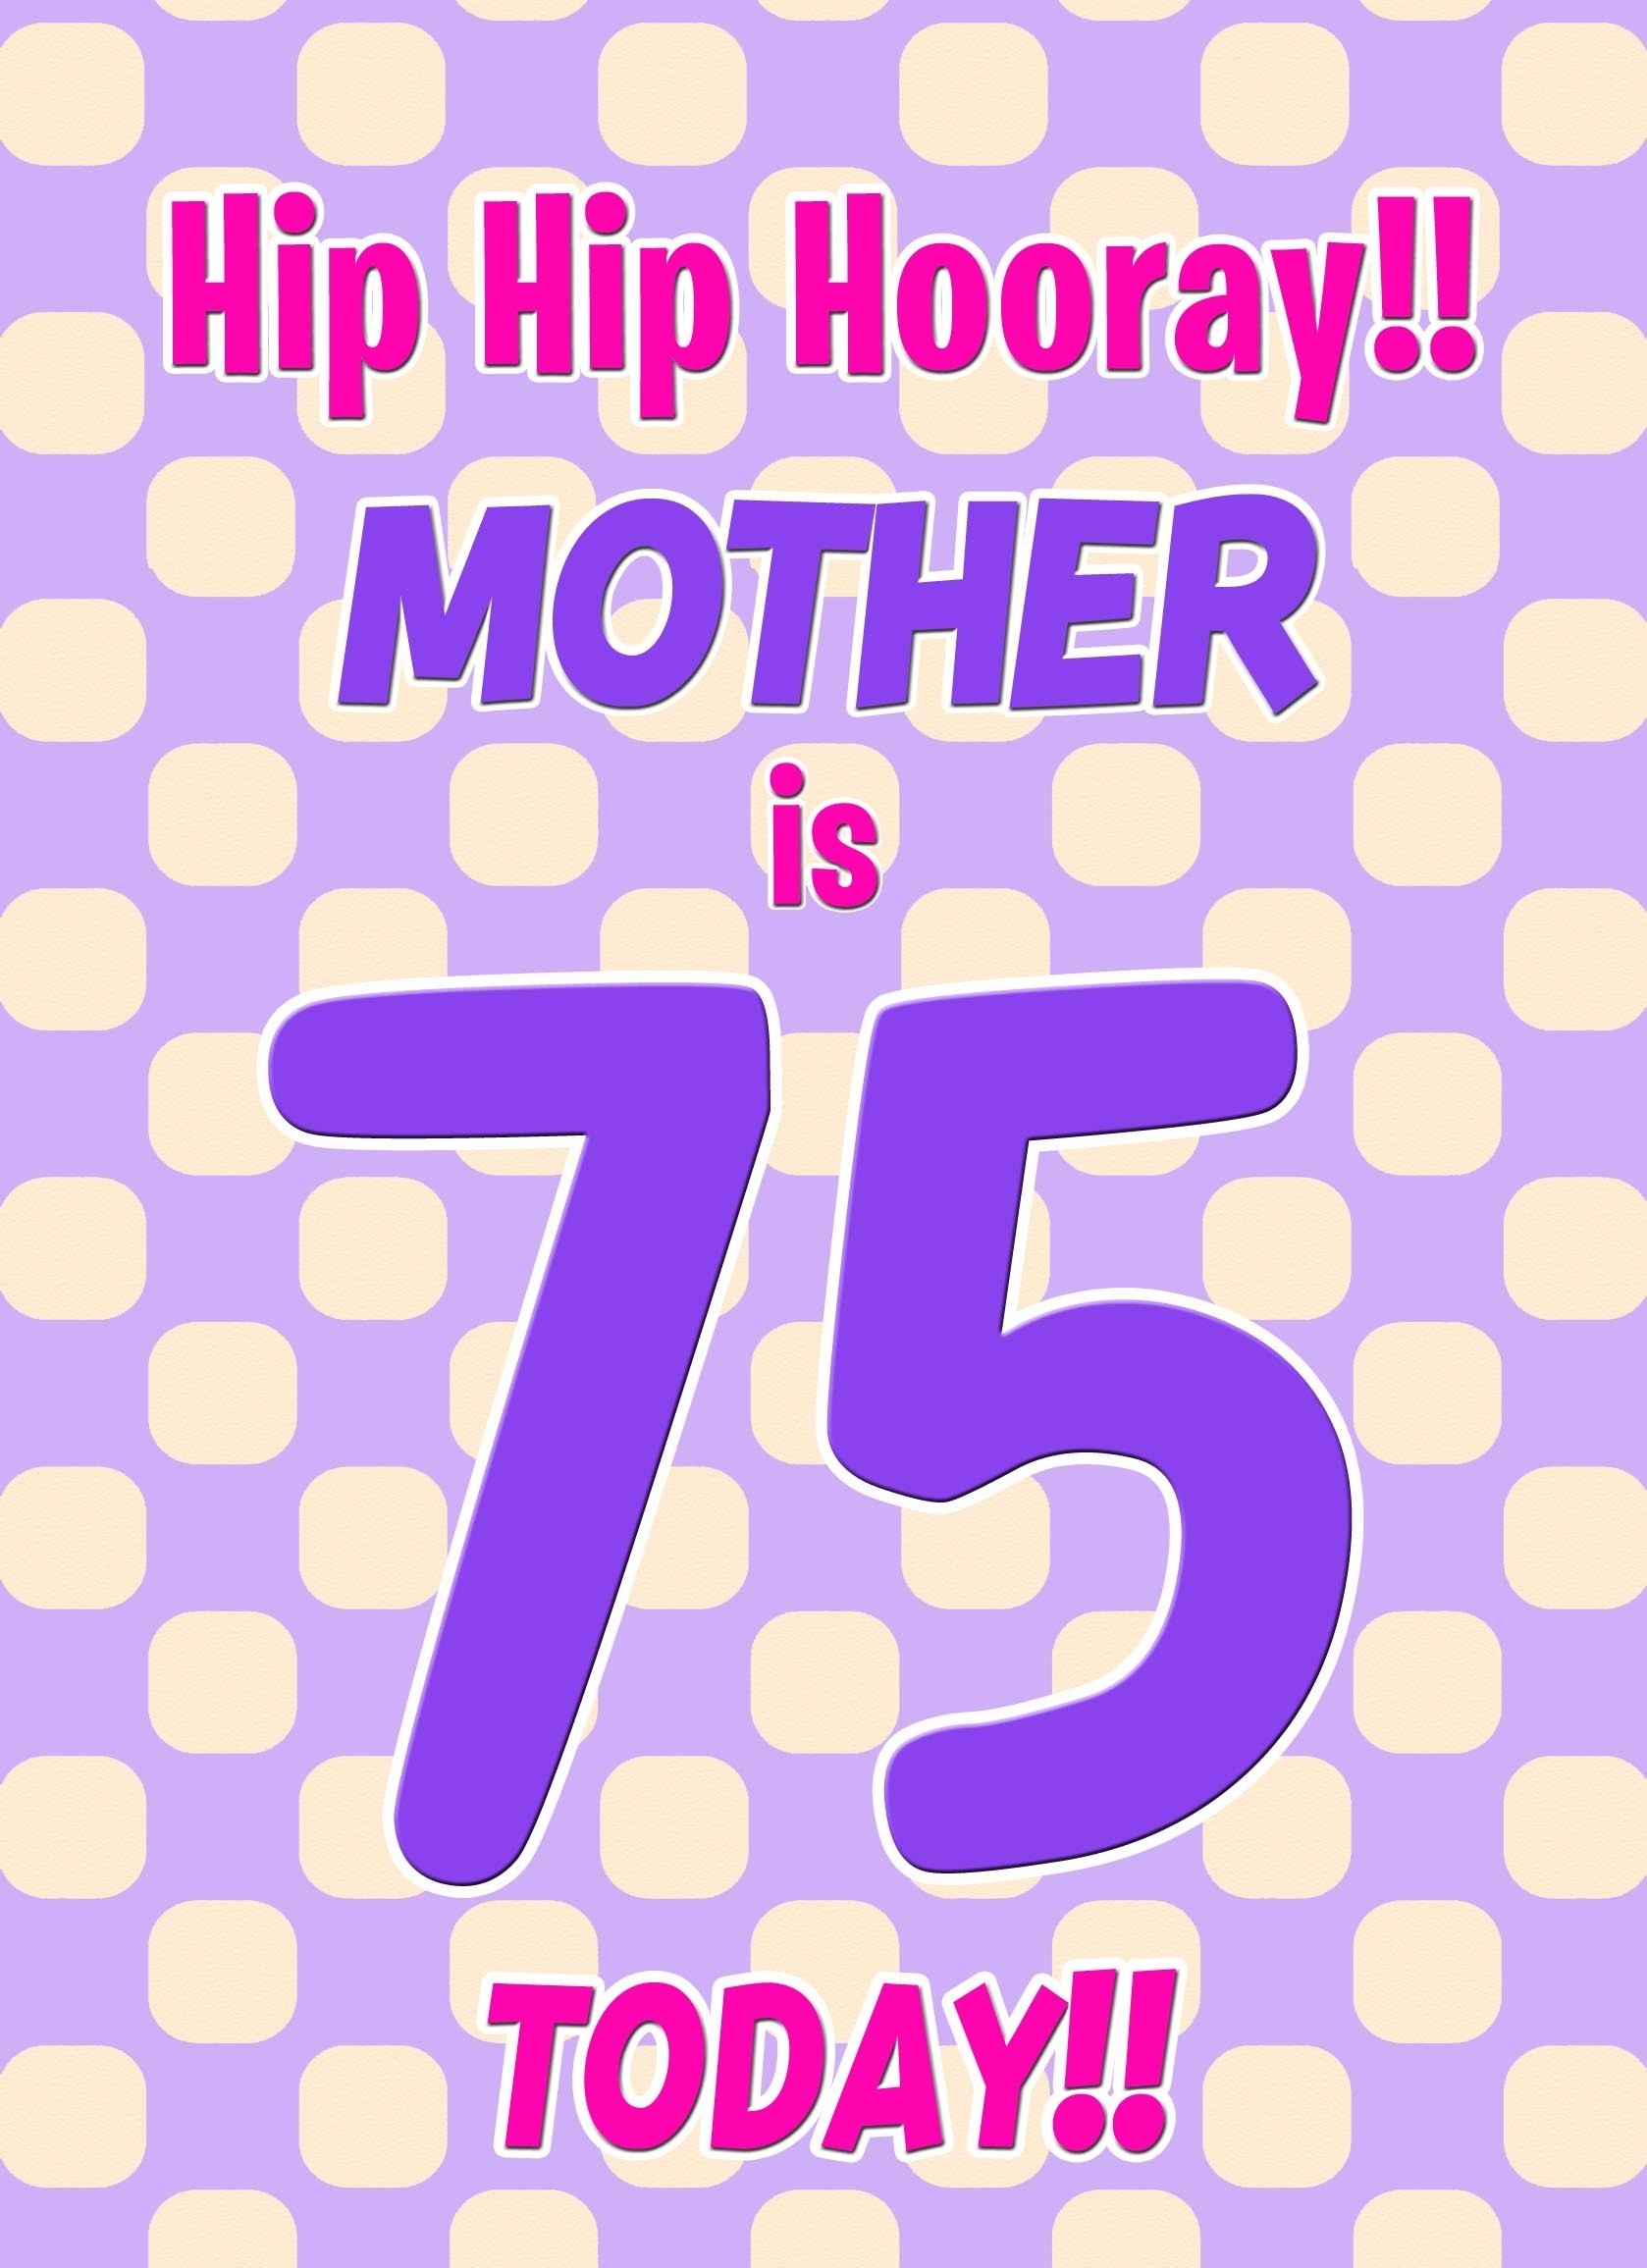 Mother 75th Birthday Card (Purple Spots)